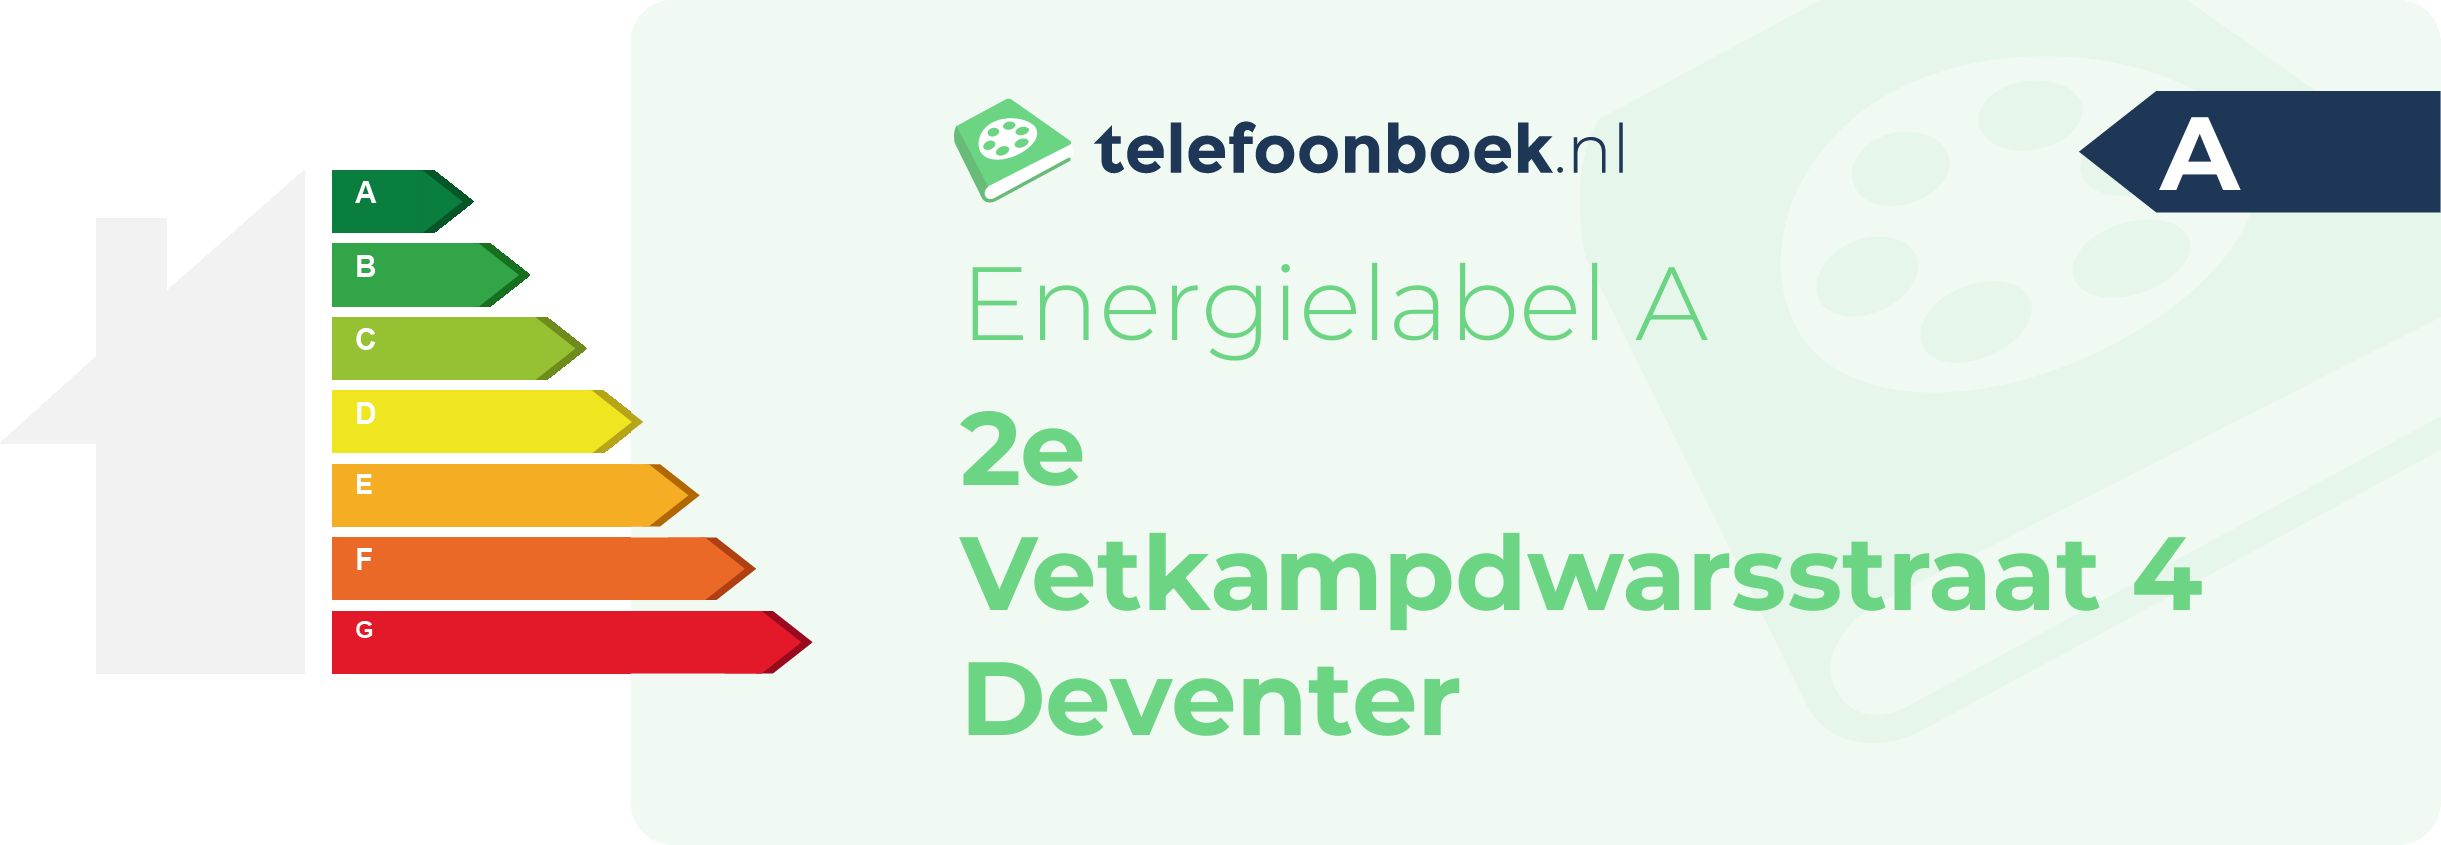 Energielabel 2e Vetkampdwarsstraat 4 Deventer